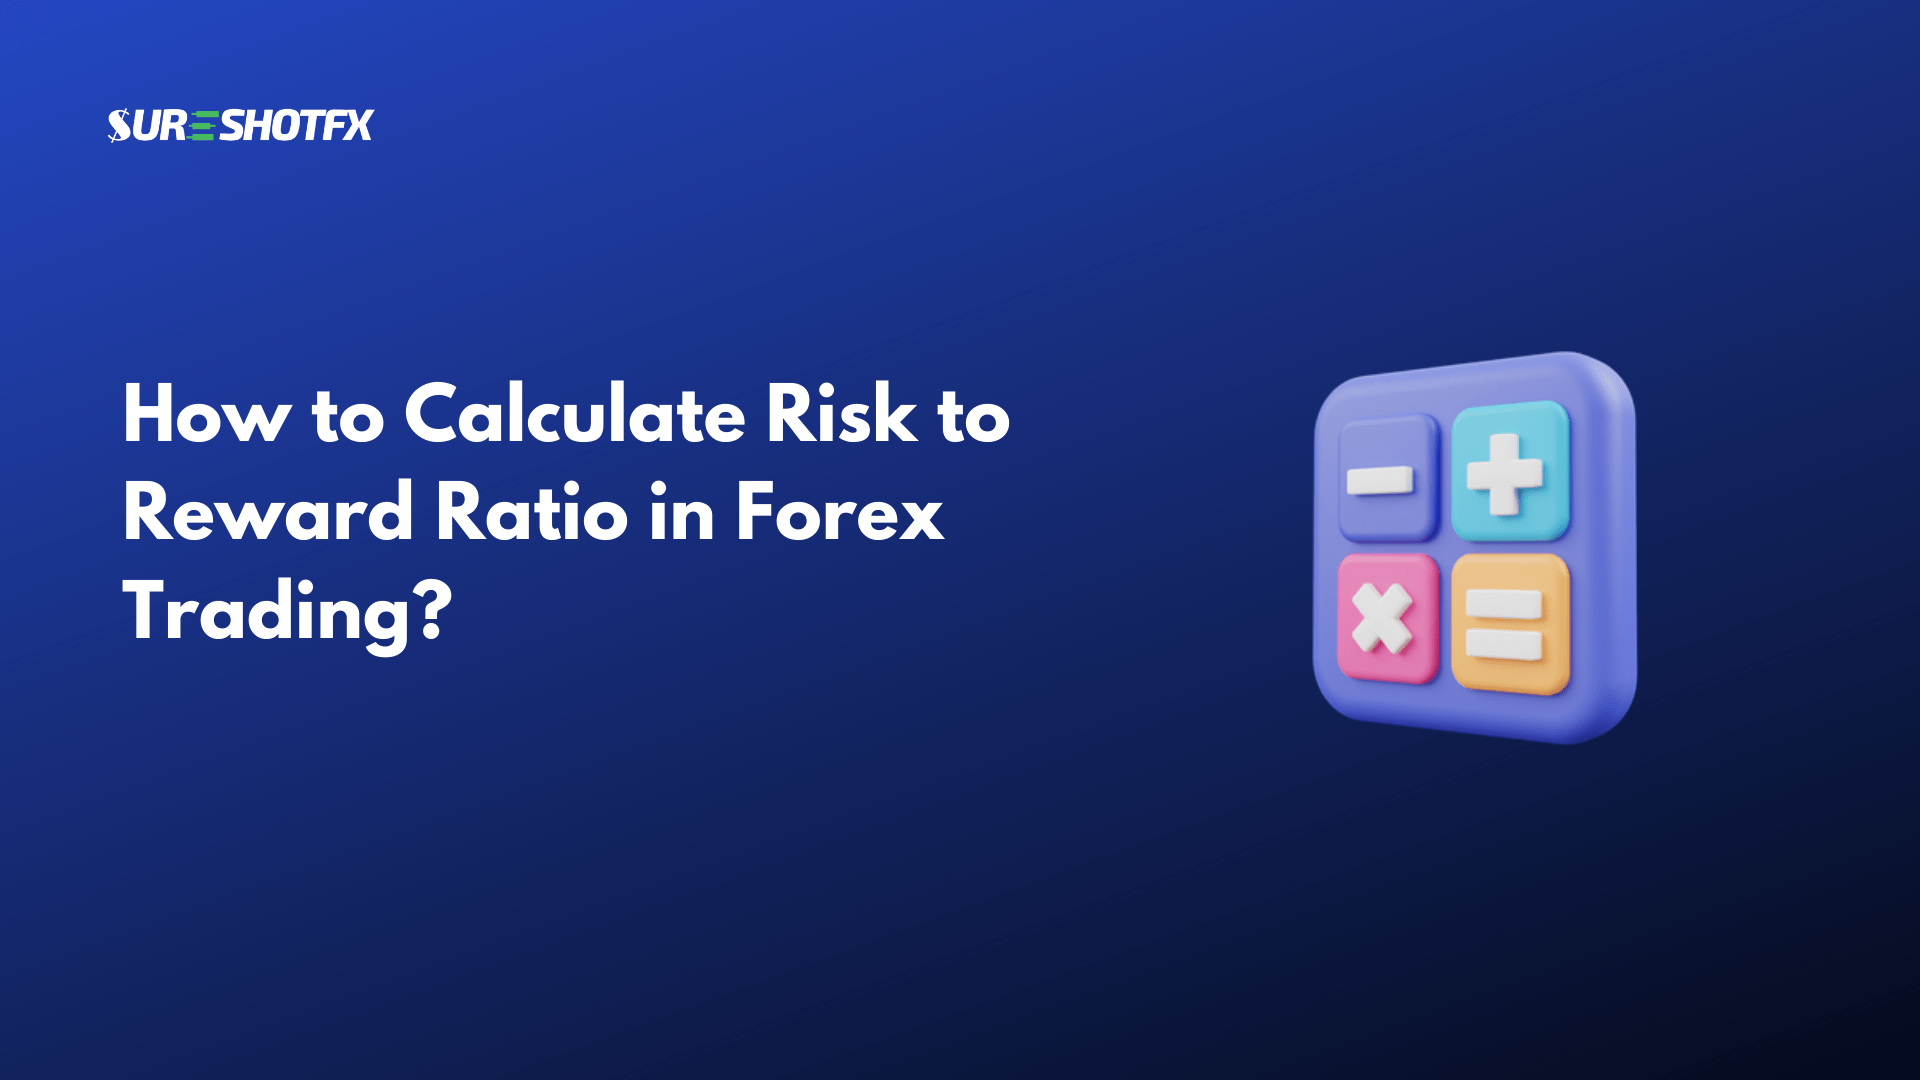 Risk reward ratio in Forex trading